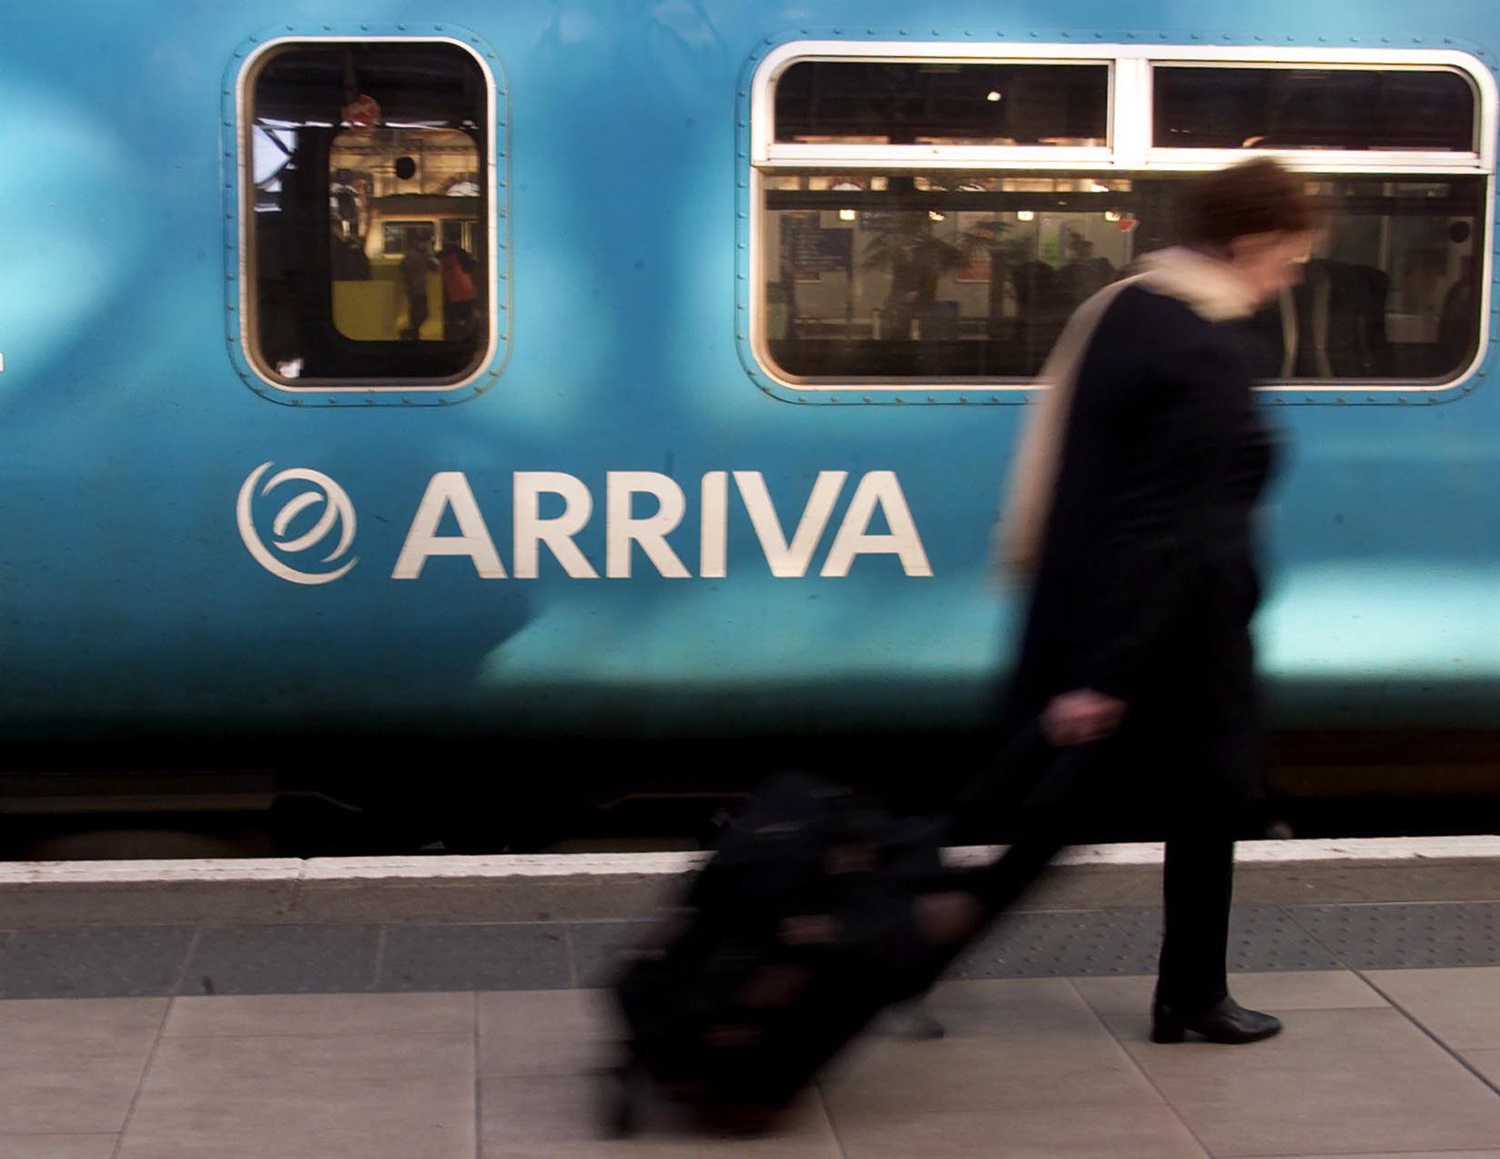 Deutsche Bahn may sell Arriva to plug multi-billion gap in finances